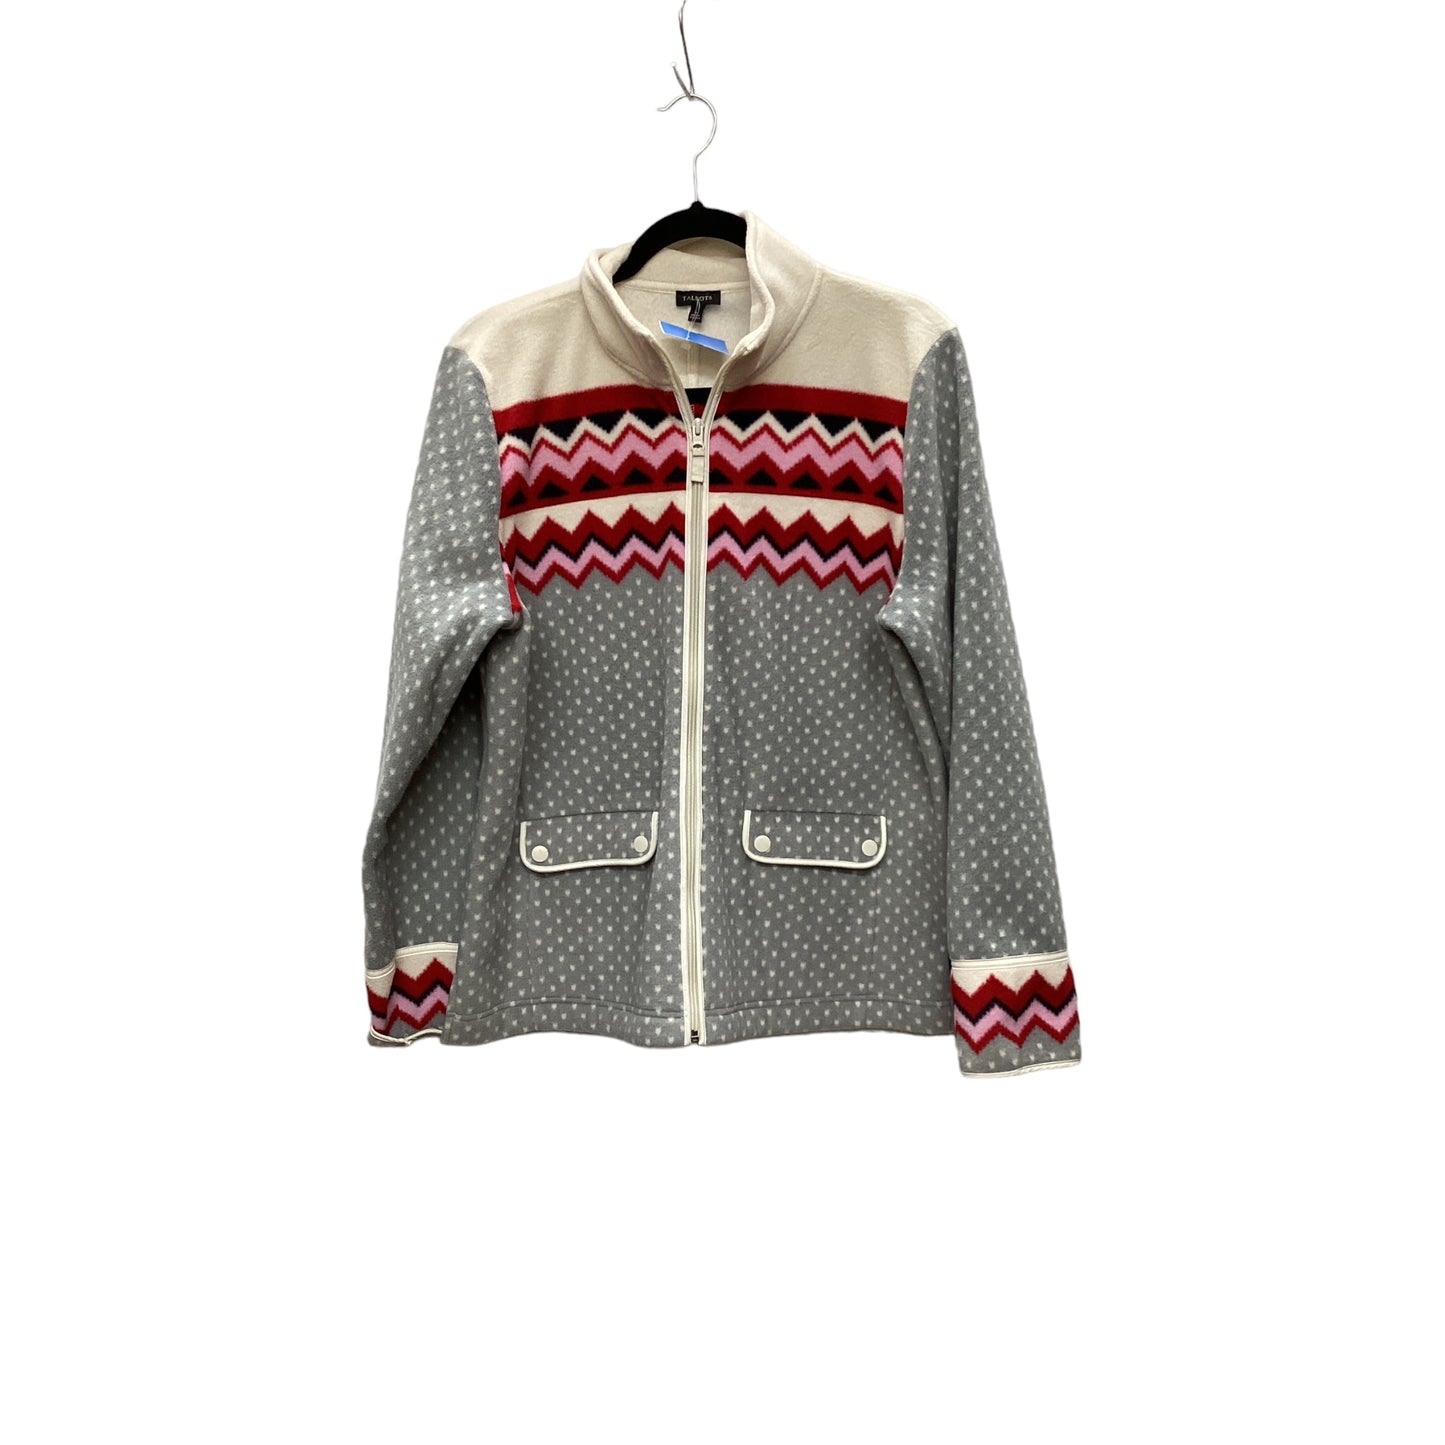 Jacket Fleece By Talbots  Size: L